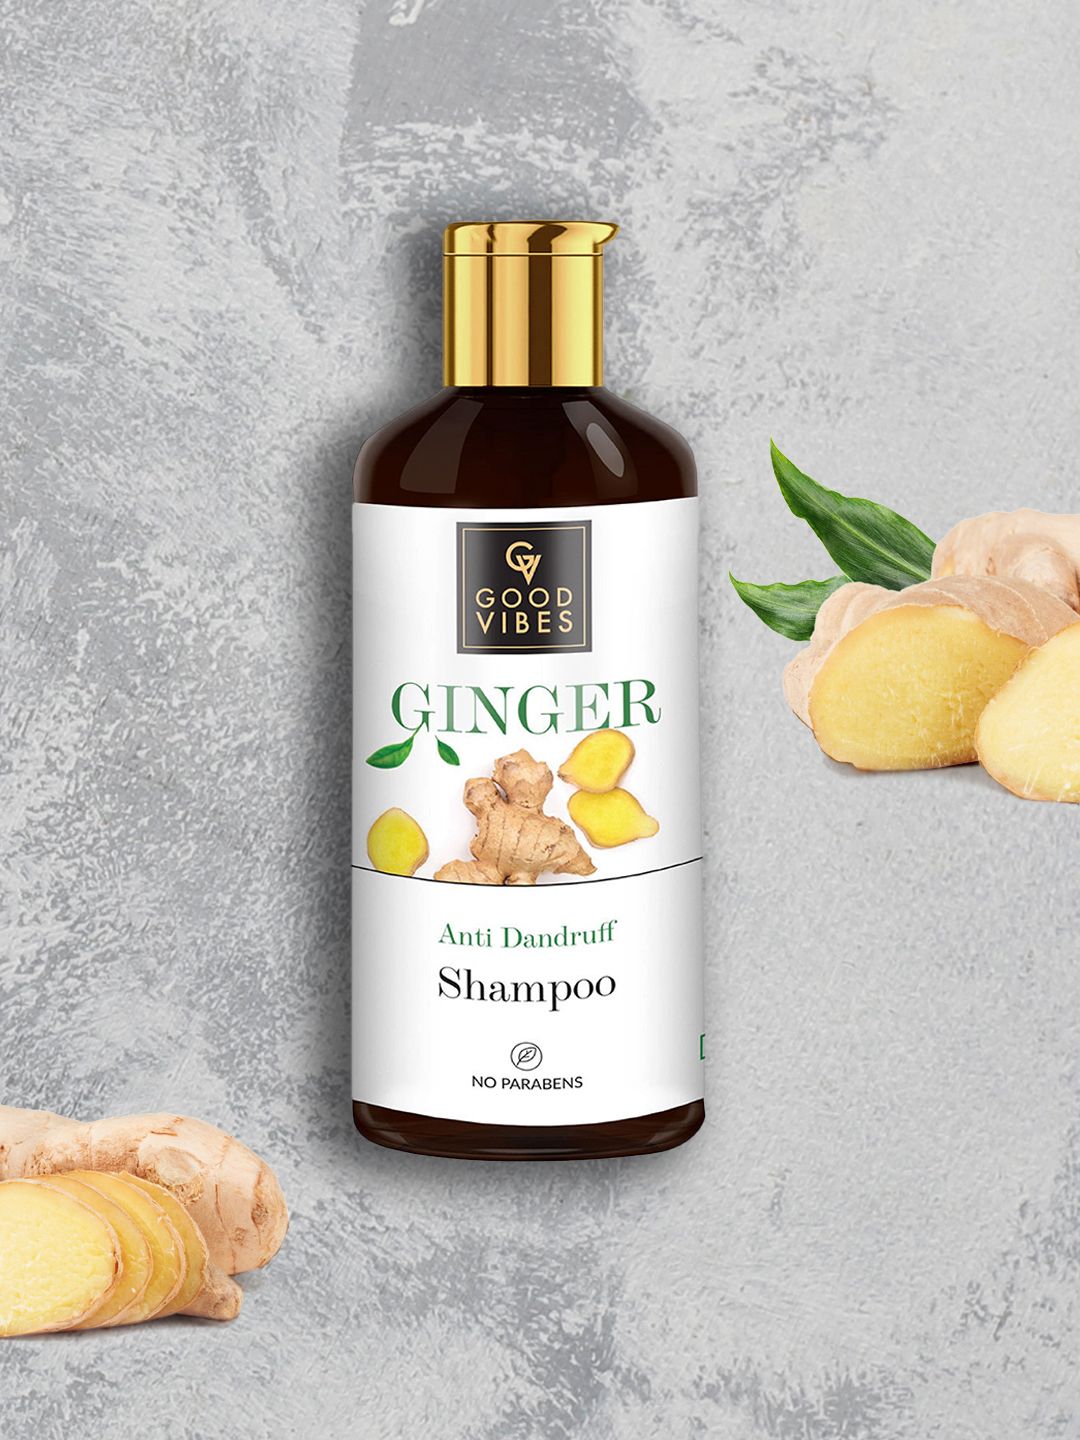 Good Vibes Ginger Anti Dandruff Shampoo 300 ml Price in India